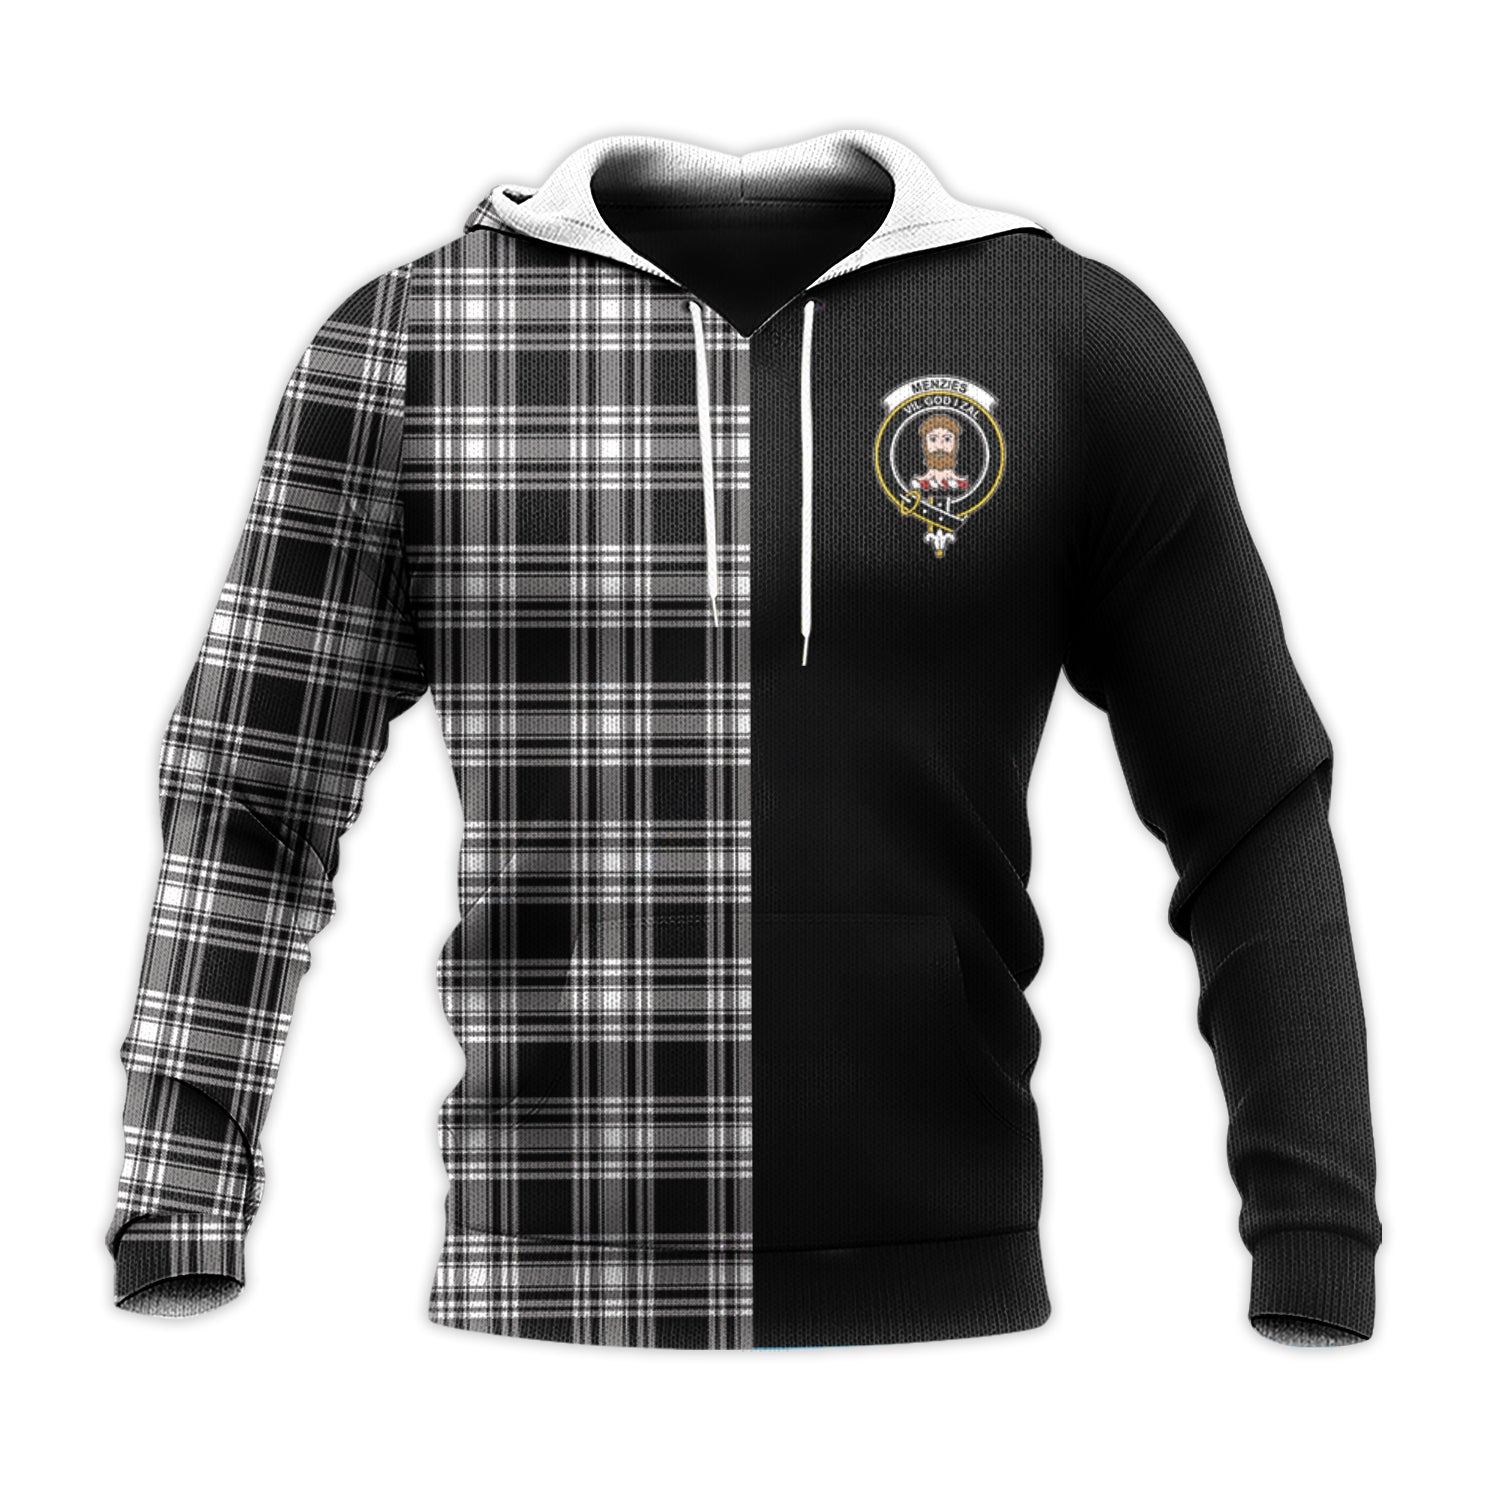 scottish-menzies-black-and-white-clan-crest-tartan-personalize-half-hoodie